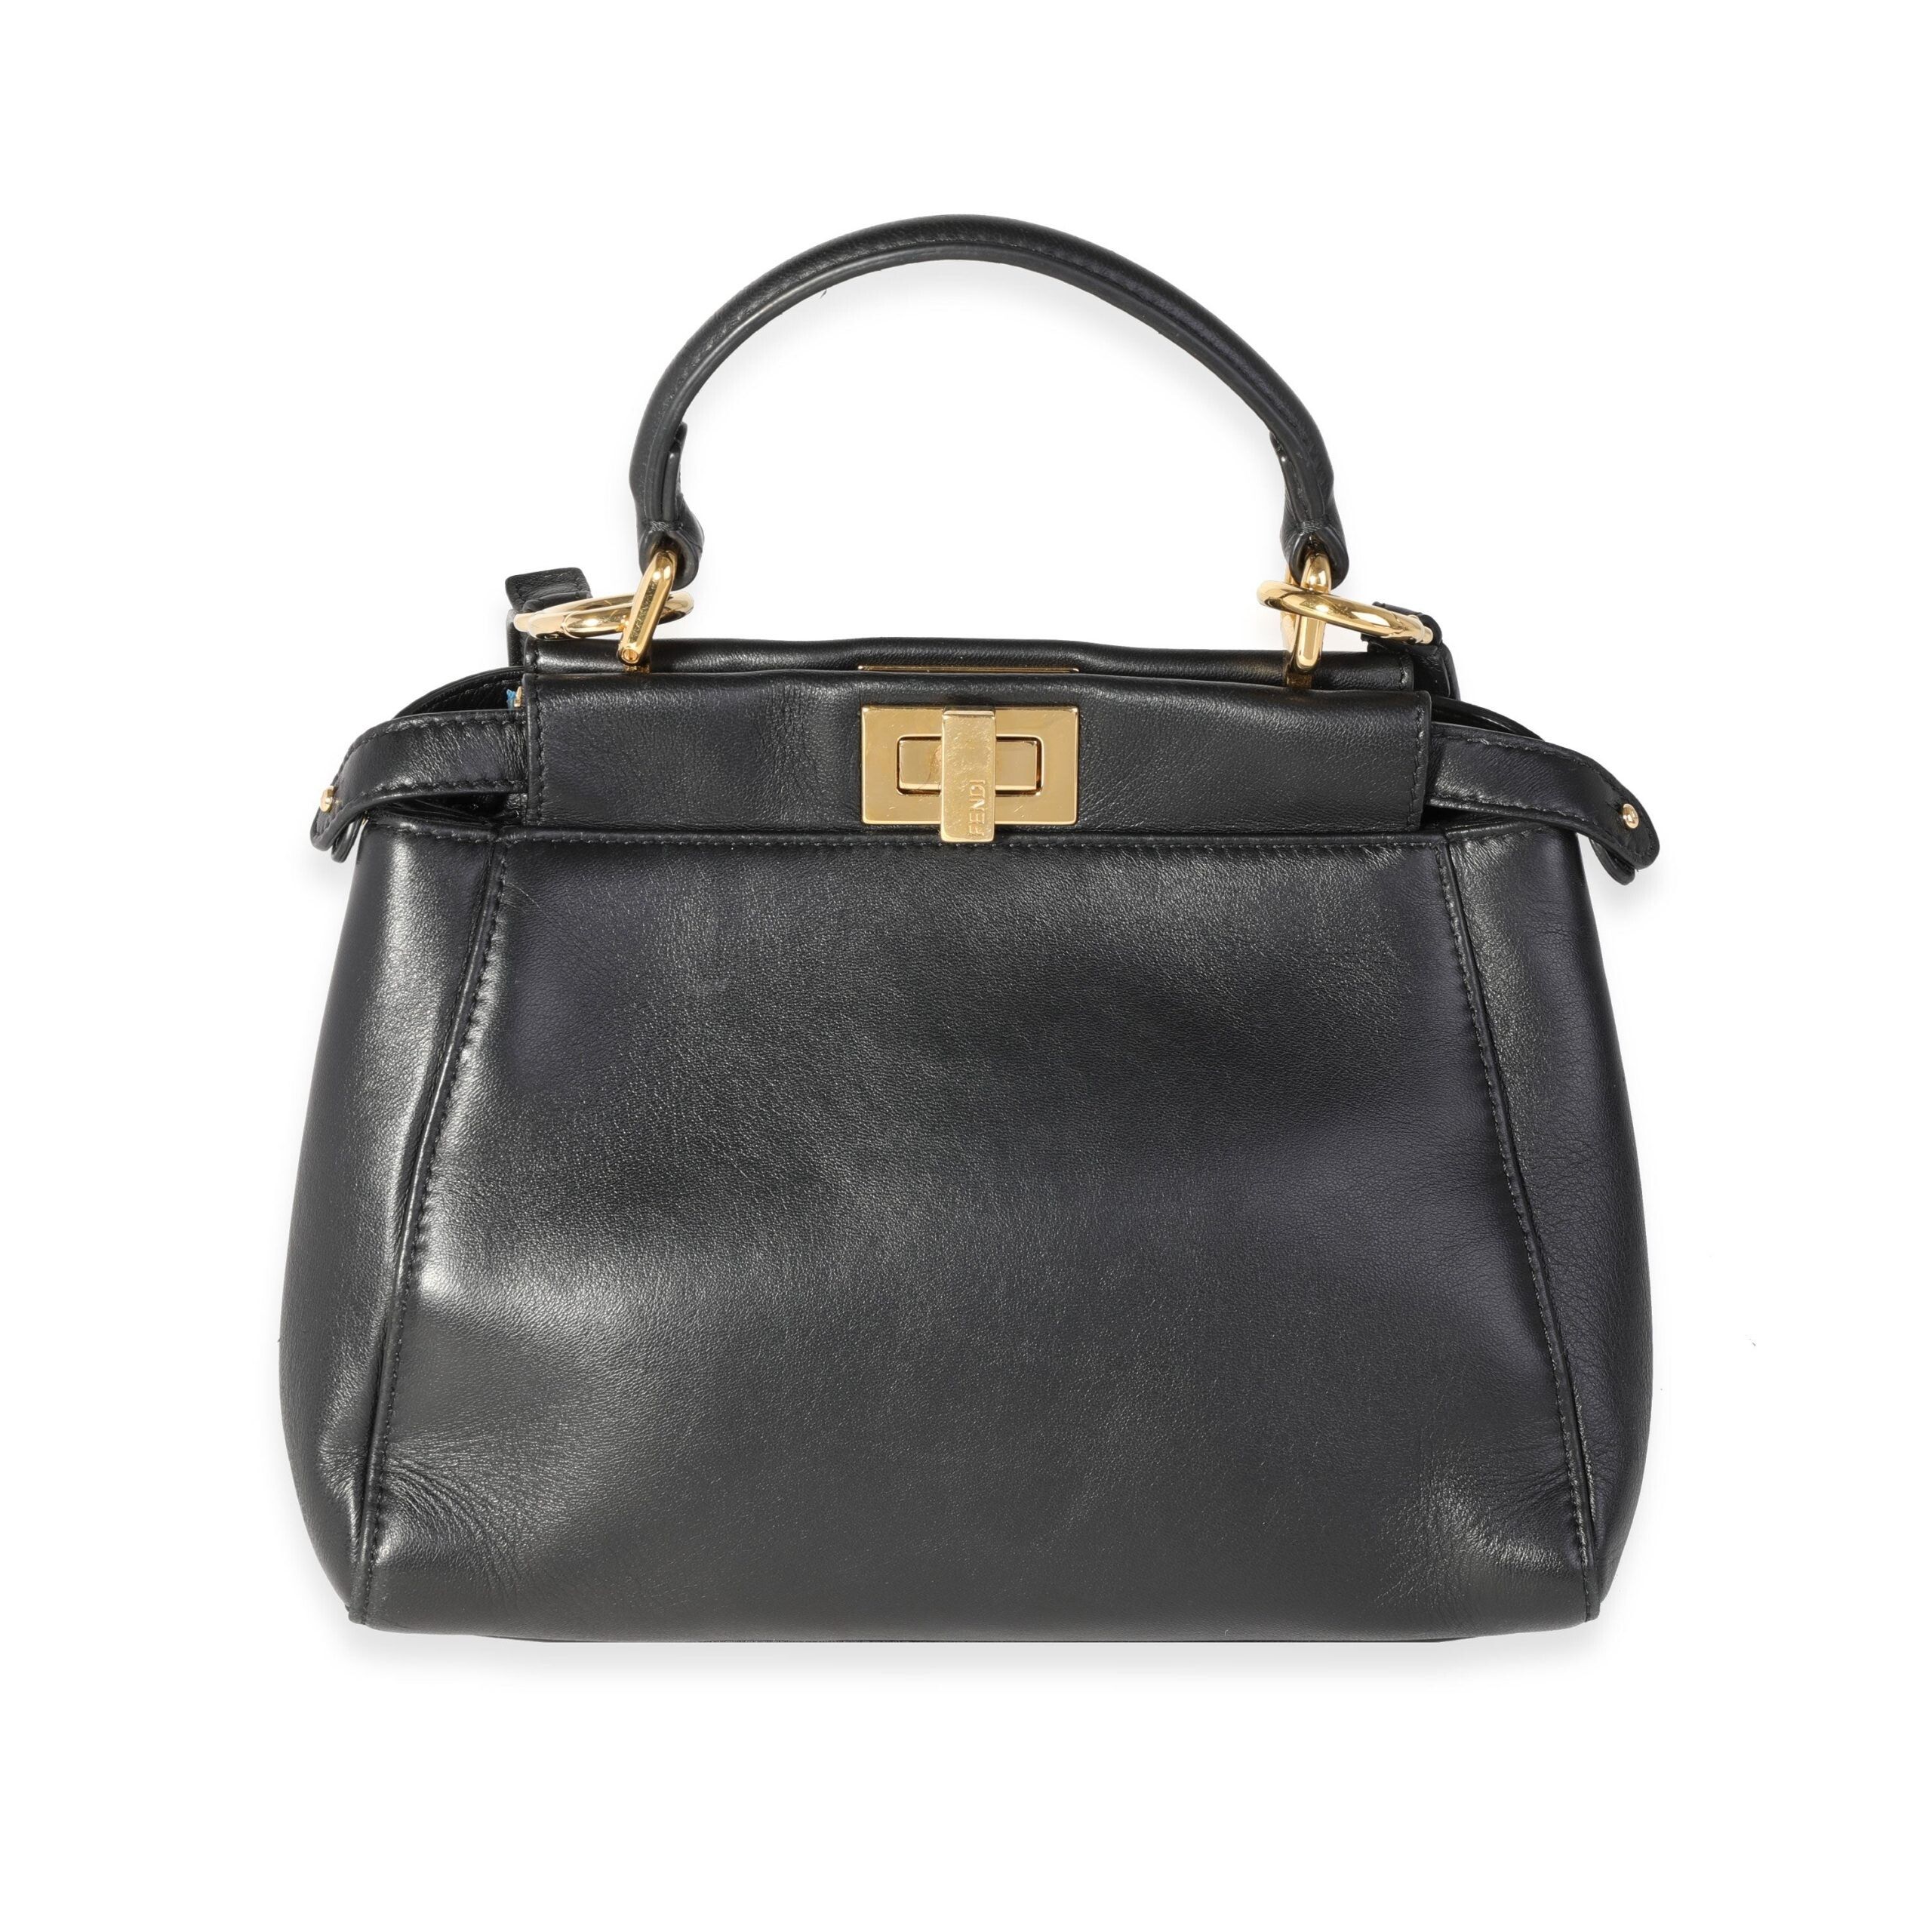 Fendi Fendi Black Nappa Leather Iconic Mini Peekaboo Bag Size ONE SIZE - 1 Preview